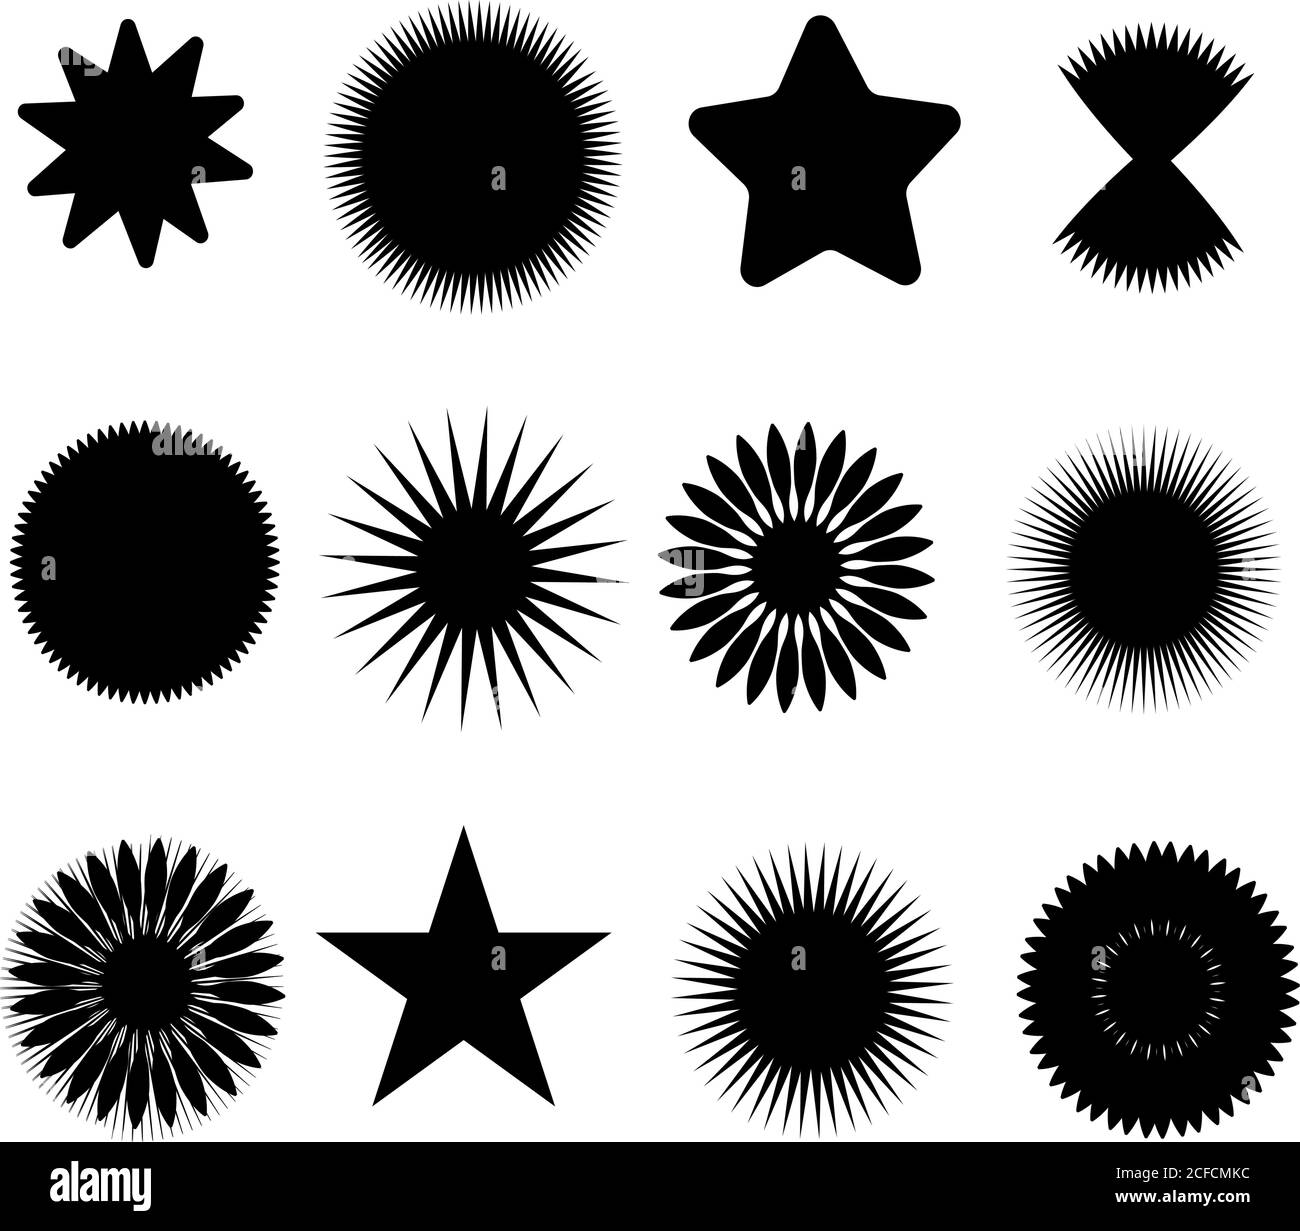 Star icons set on white background. Vector illustration Stock Vector